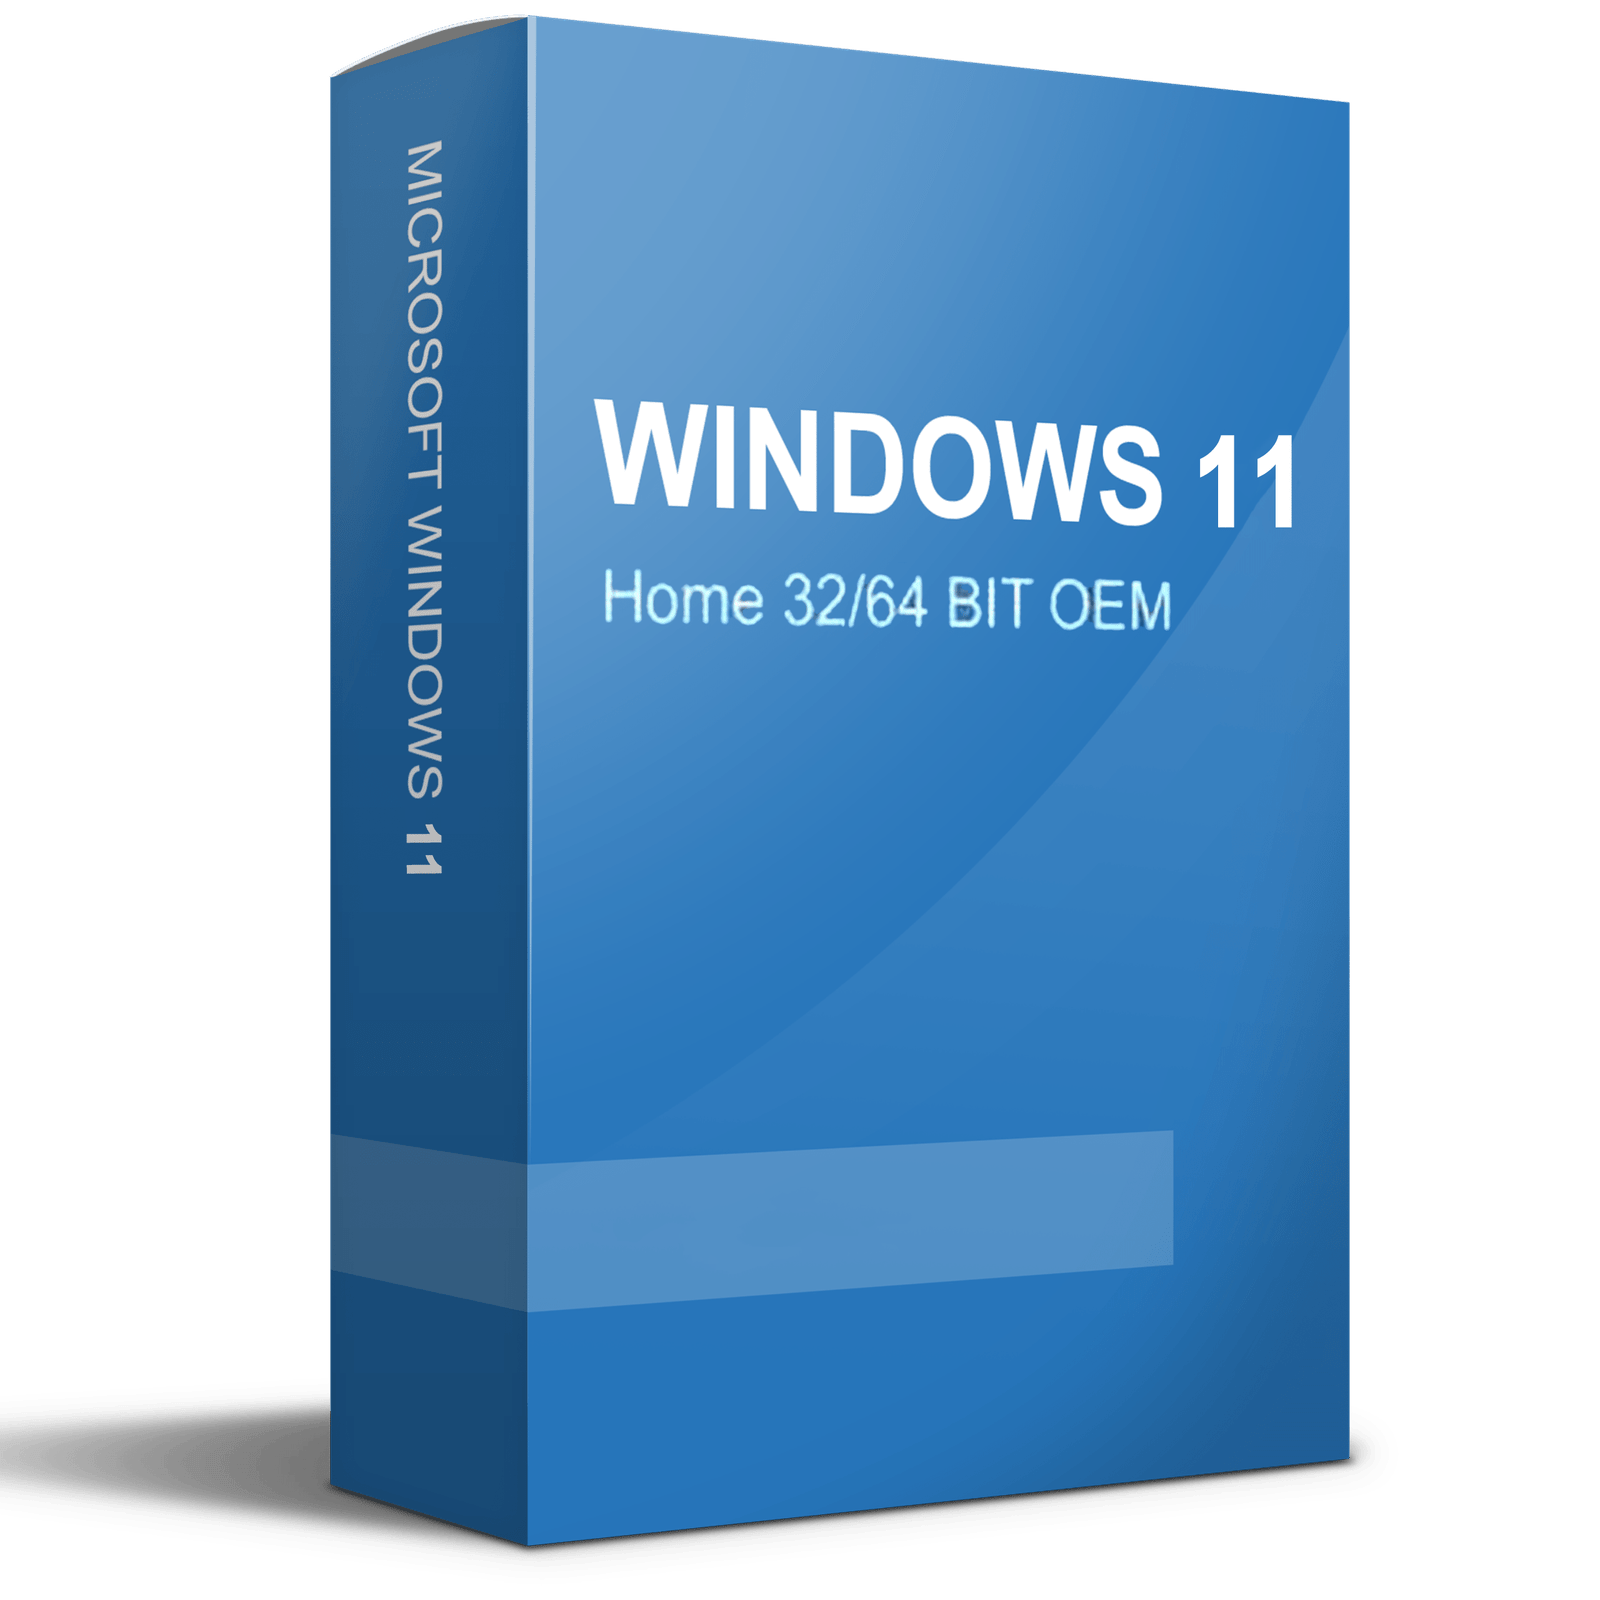 Microsoft Windows 11 Home (PC) 32/64 Bits OEM (Retail)